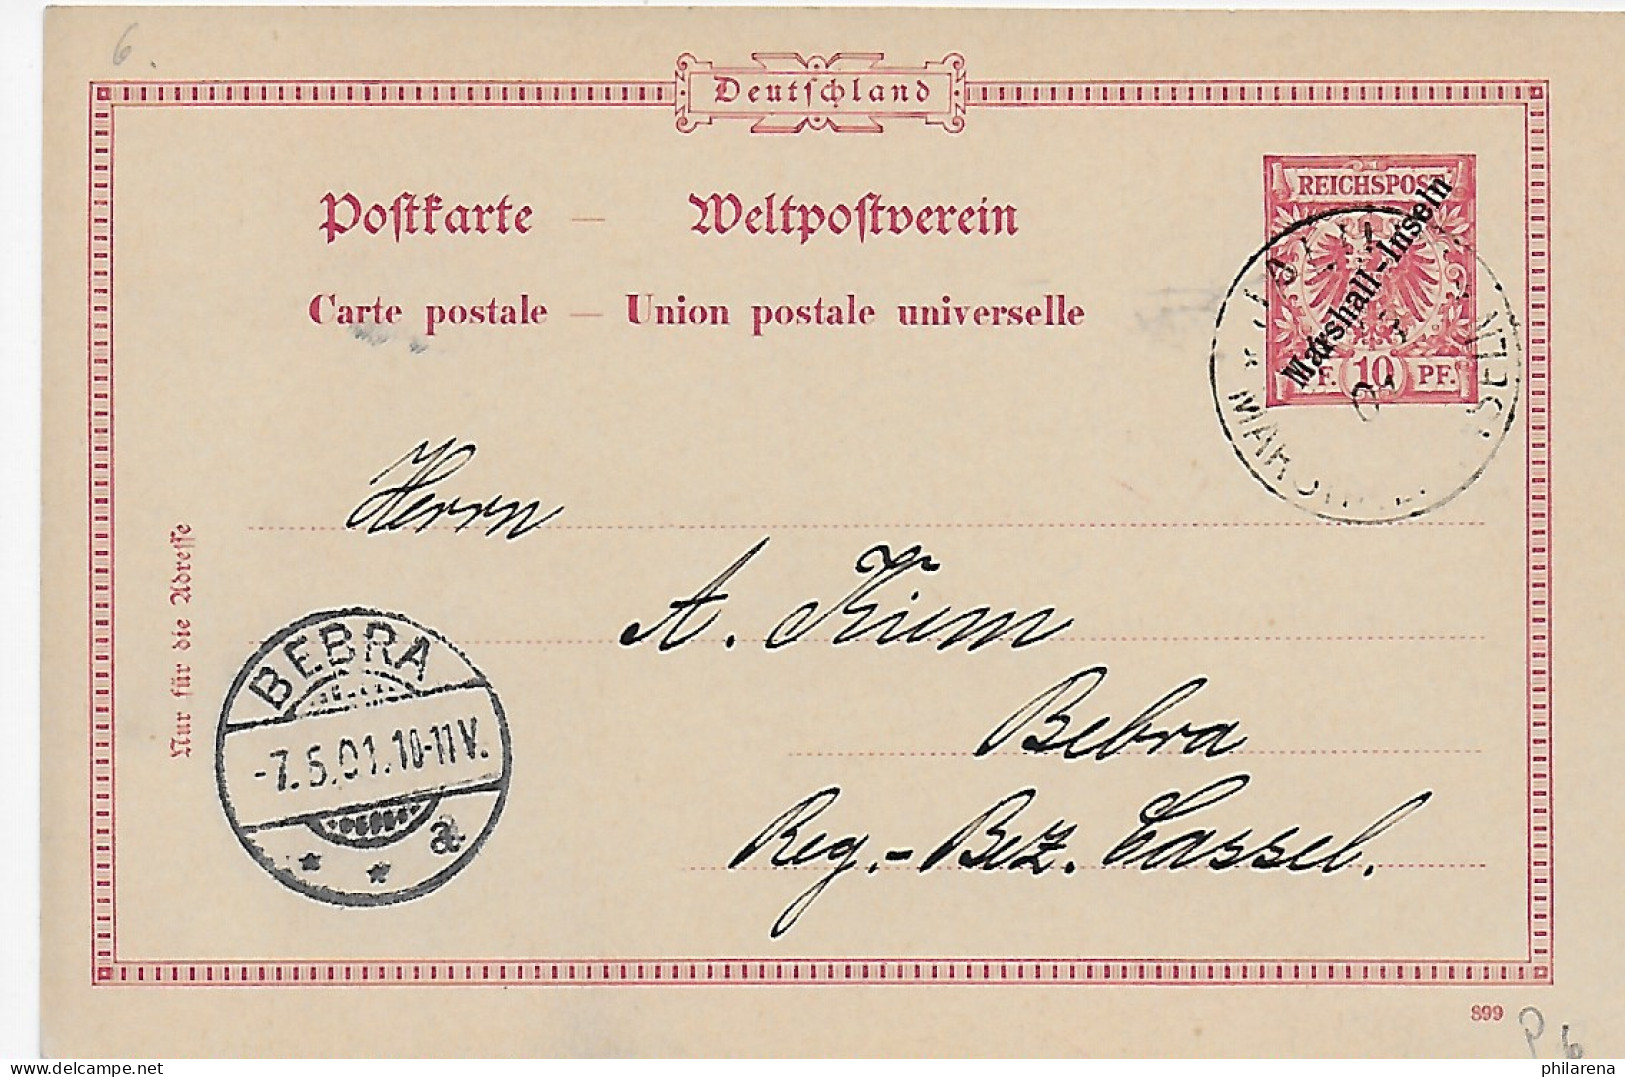 Ganzsache MiNr. D6, Jaluit Nach Bebra/Kassel, 1906, Rückseite Blanko - Marshall-Inseln